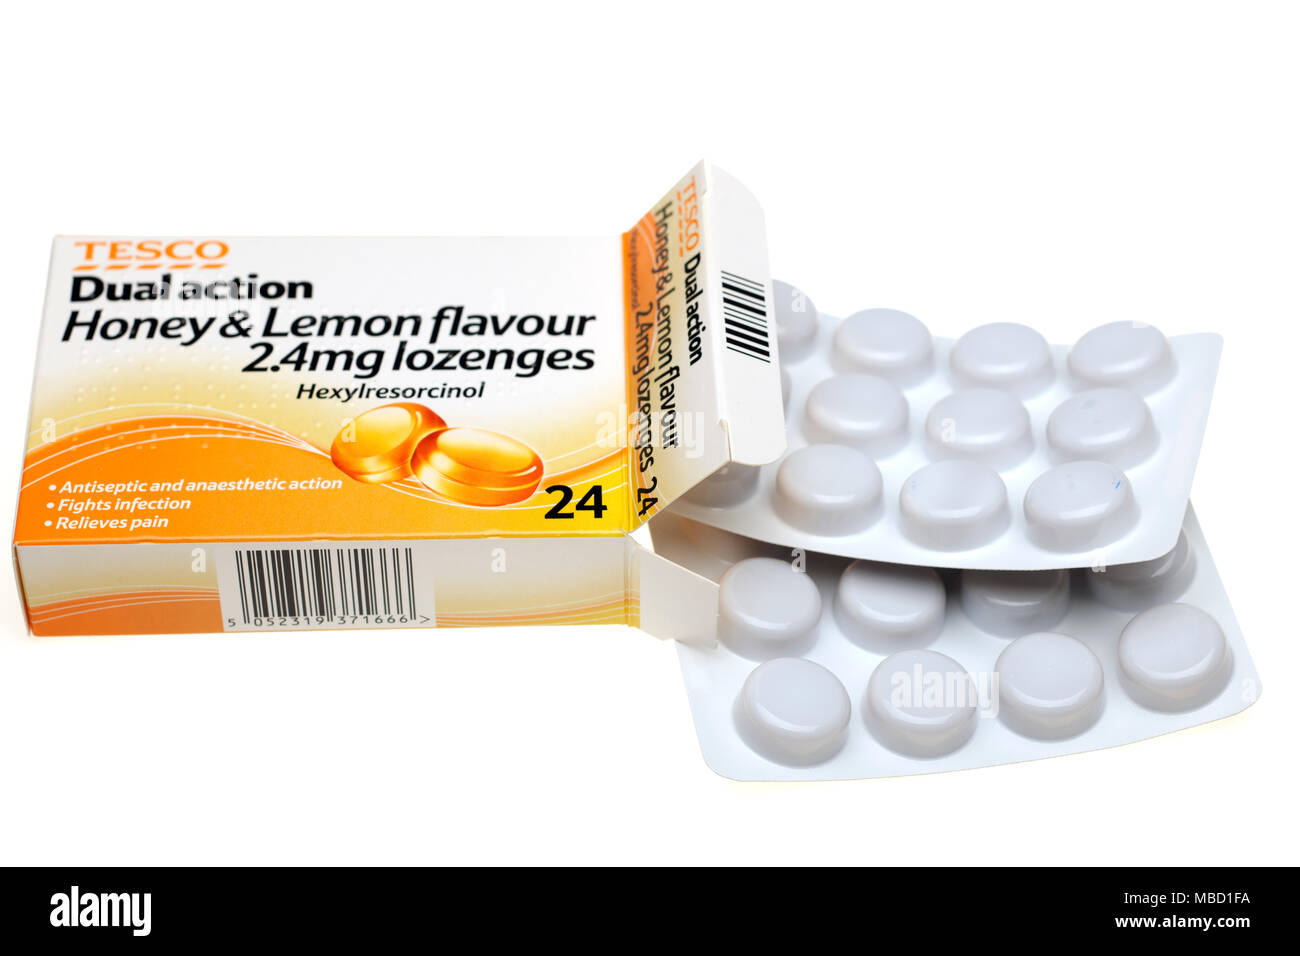 Box of Tesco Dual action honey and lemon flavoured lozenges Stock Photo